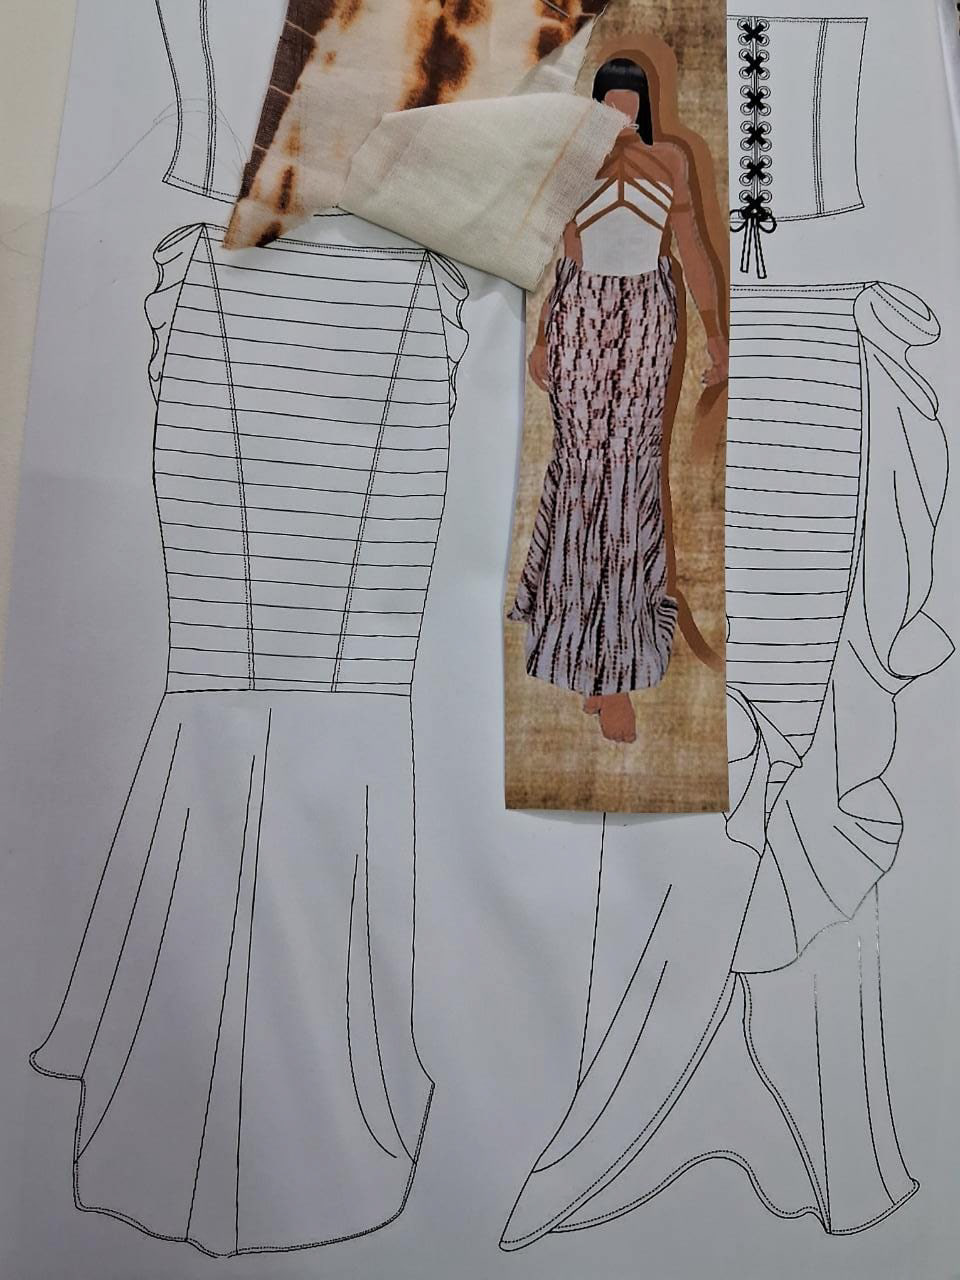 concept digital illustration fahion fashion design portfolio Portfolio Design sketch